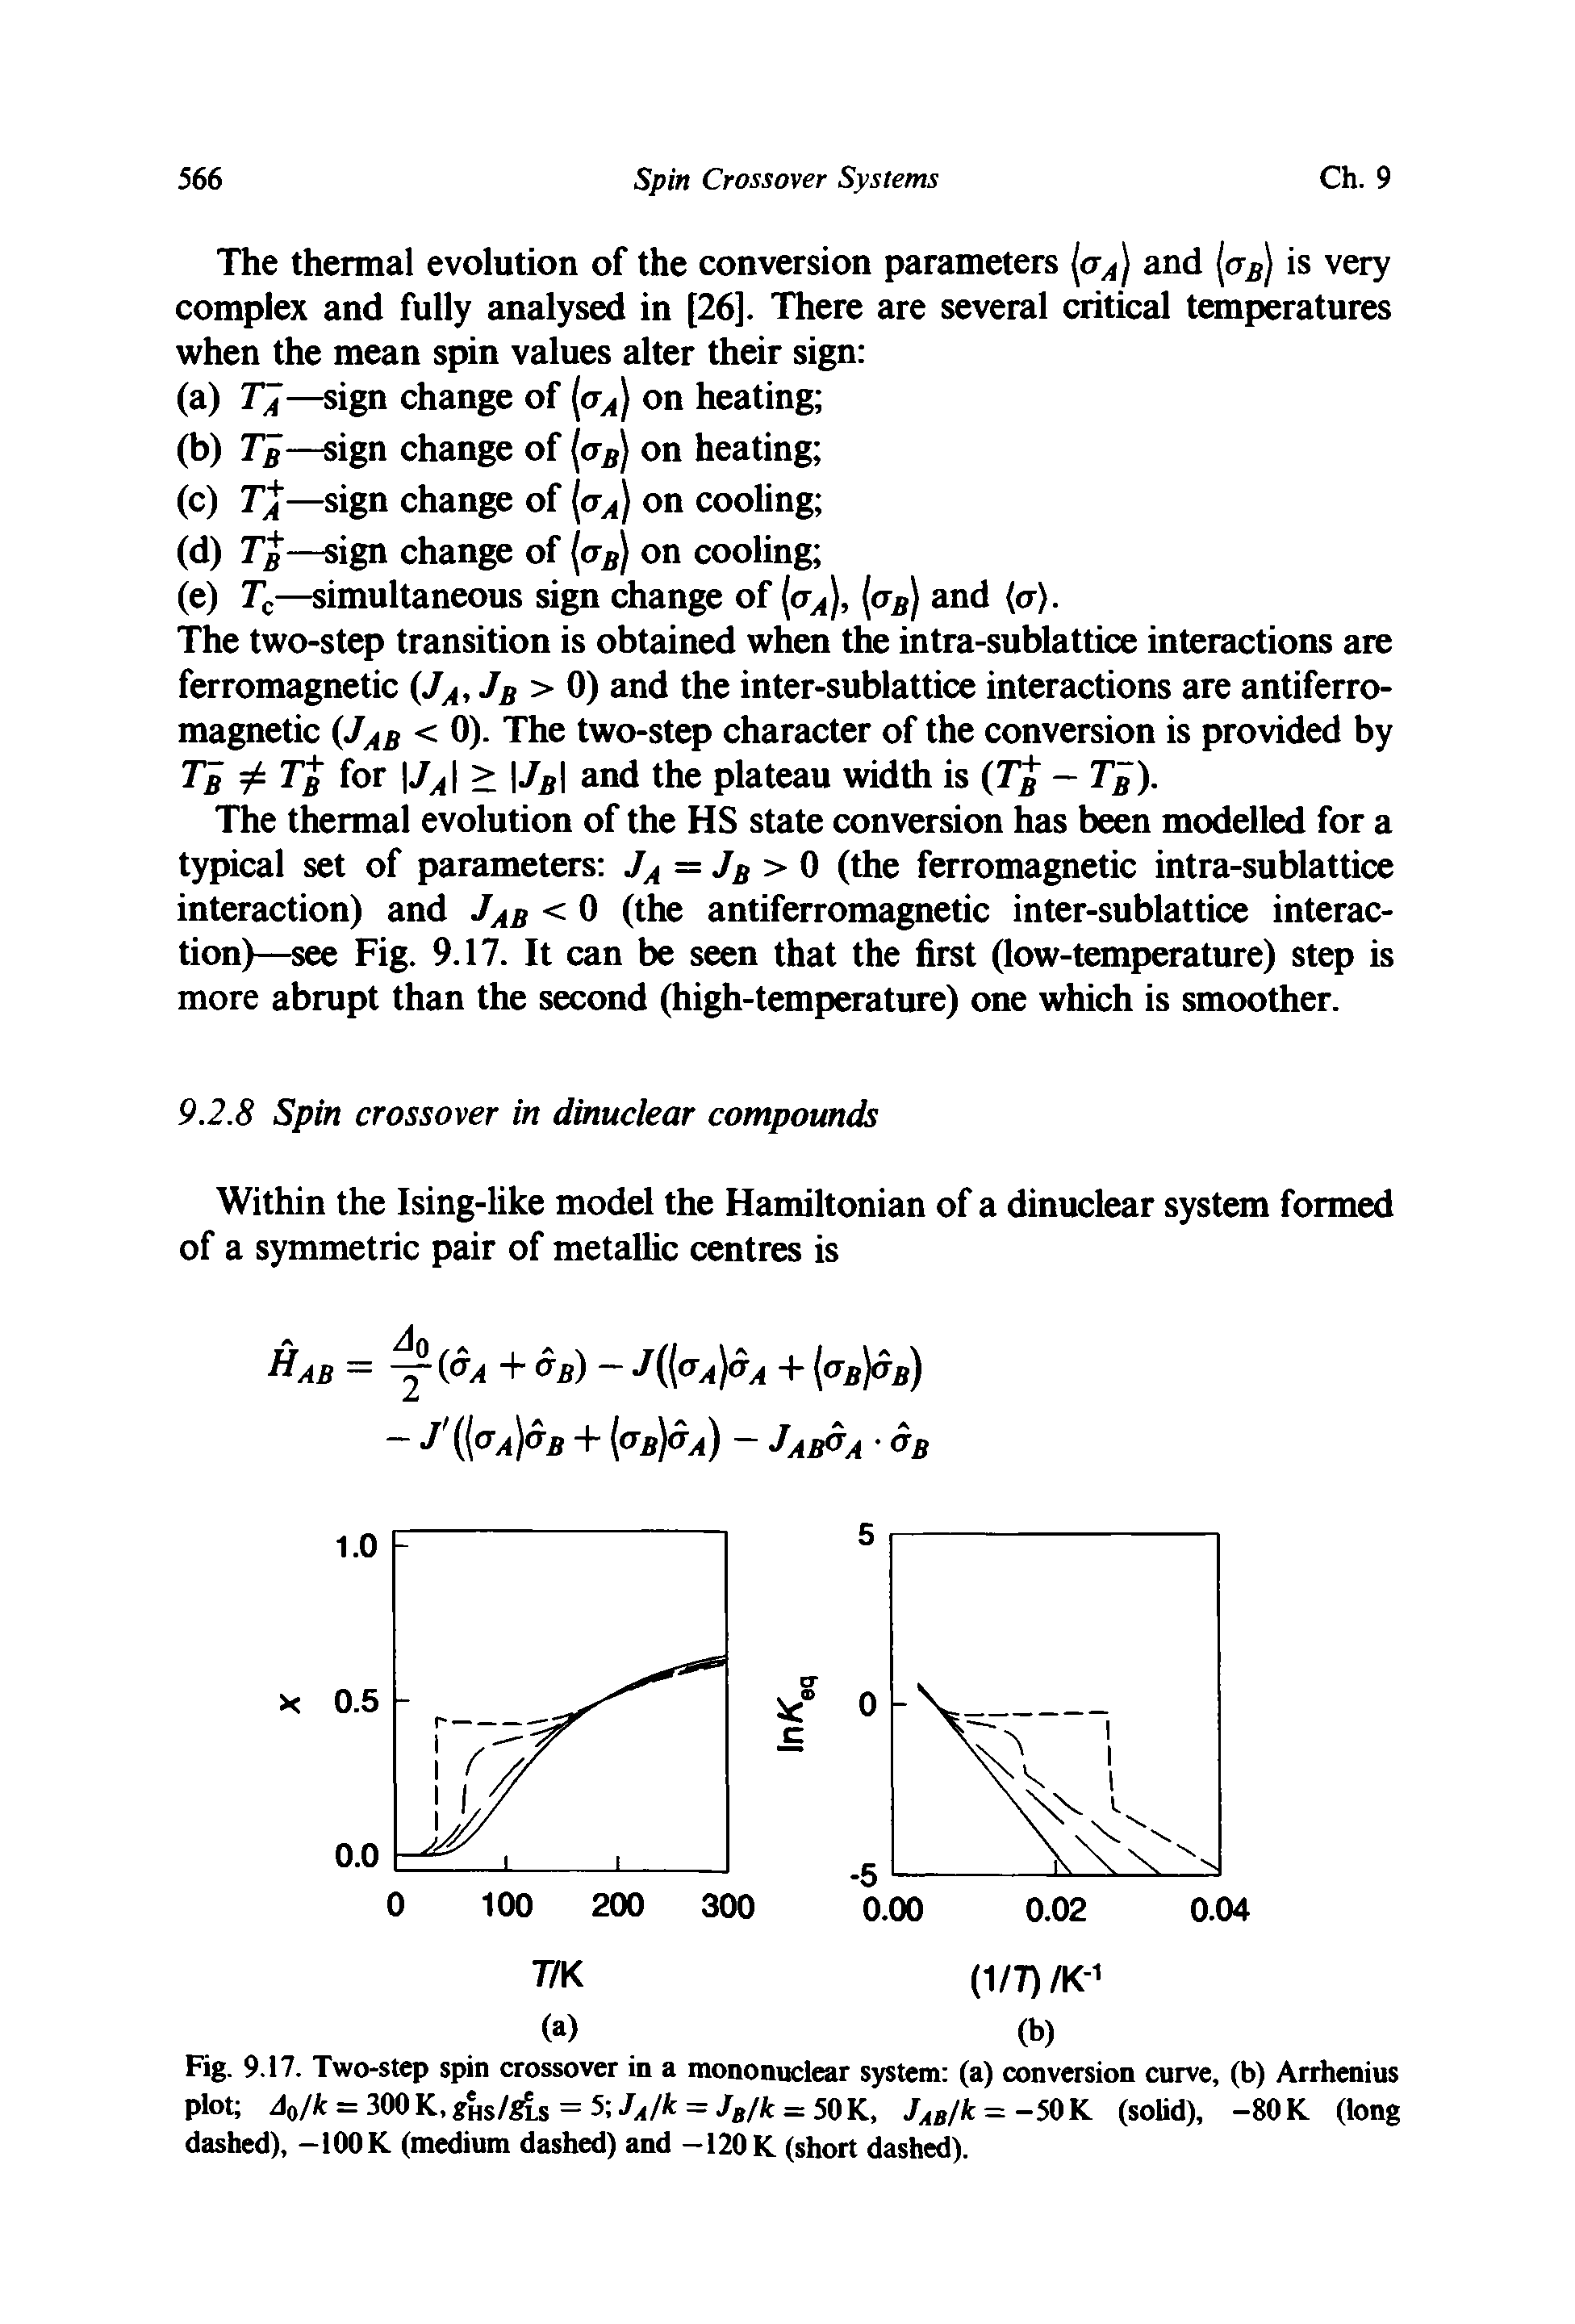 Fig. 9.17. Two-step spin crossover in a mononuclear system (a) conversion curve, (b) Arrhenius plot Aq/k = 300 K, gfis/gis = 5 JA/k = JB/k = 50K, JAB/k = -50K (solid), -80 K (long dashed), — 100K (medium dashed) and —120 K (short dashed).